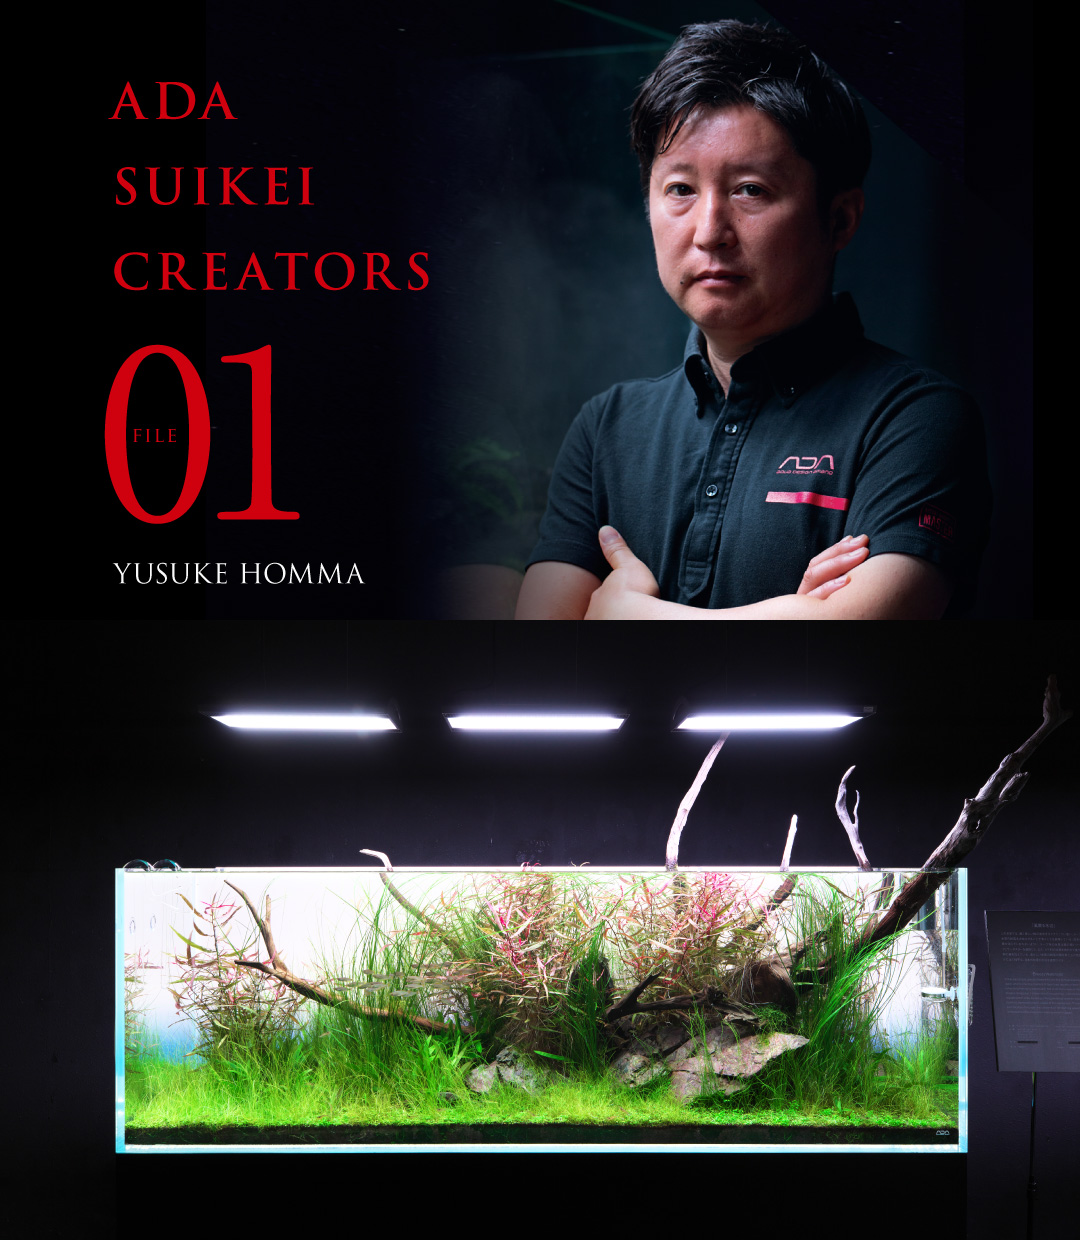 ADA SUIKEI CREATORS #01 Yusuke Homma